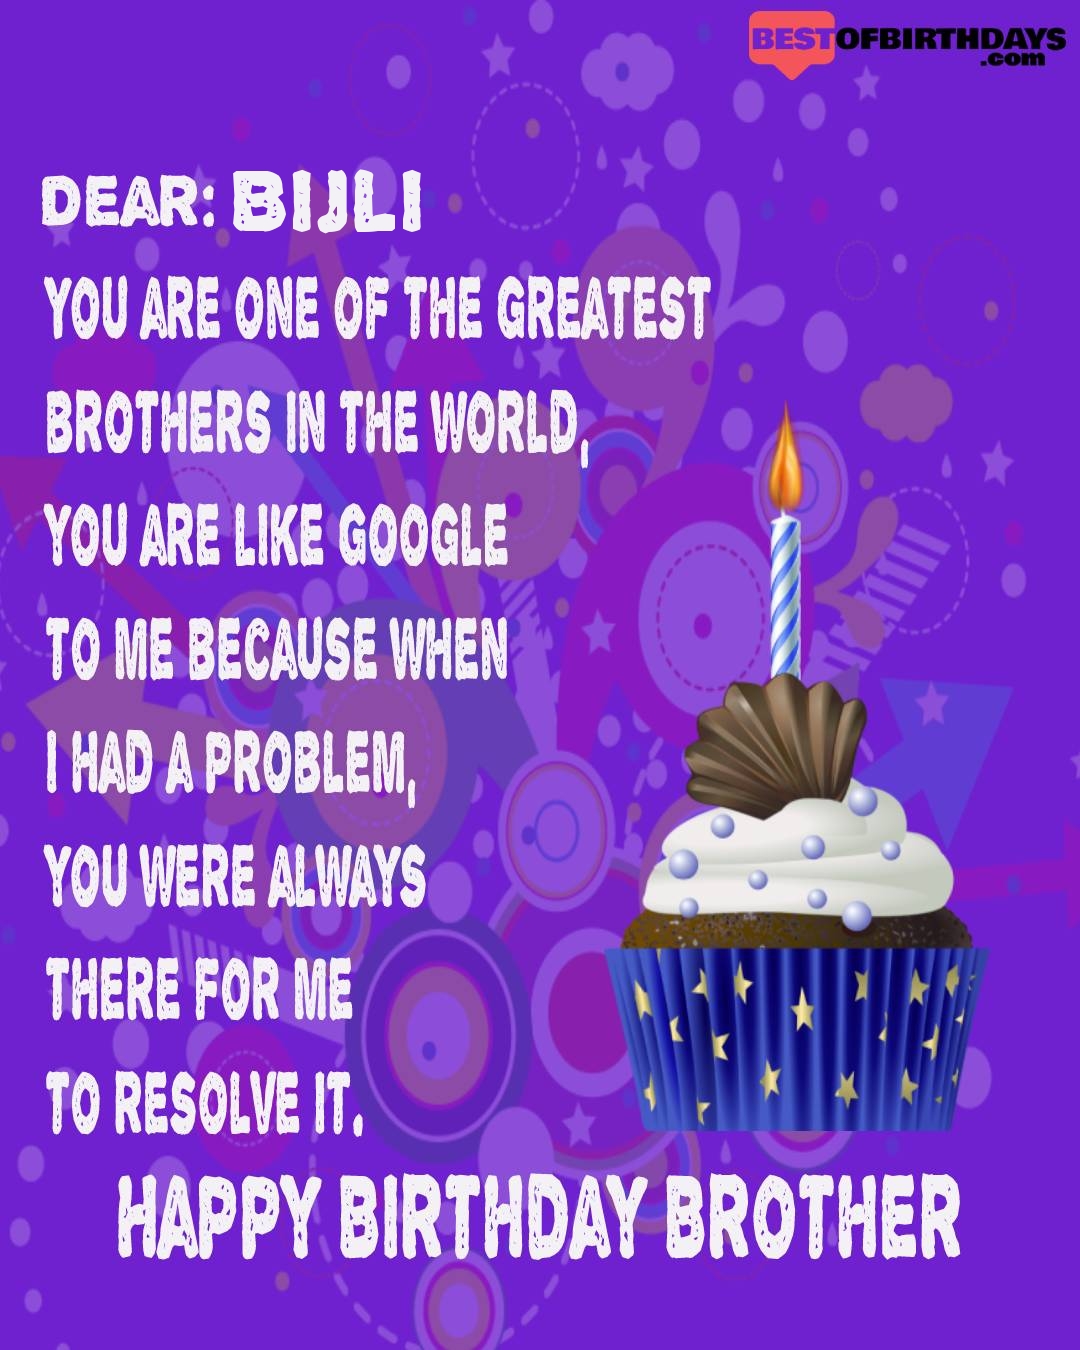 Happy birthday bijli bhai brother bro